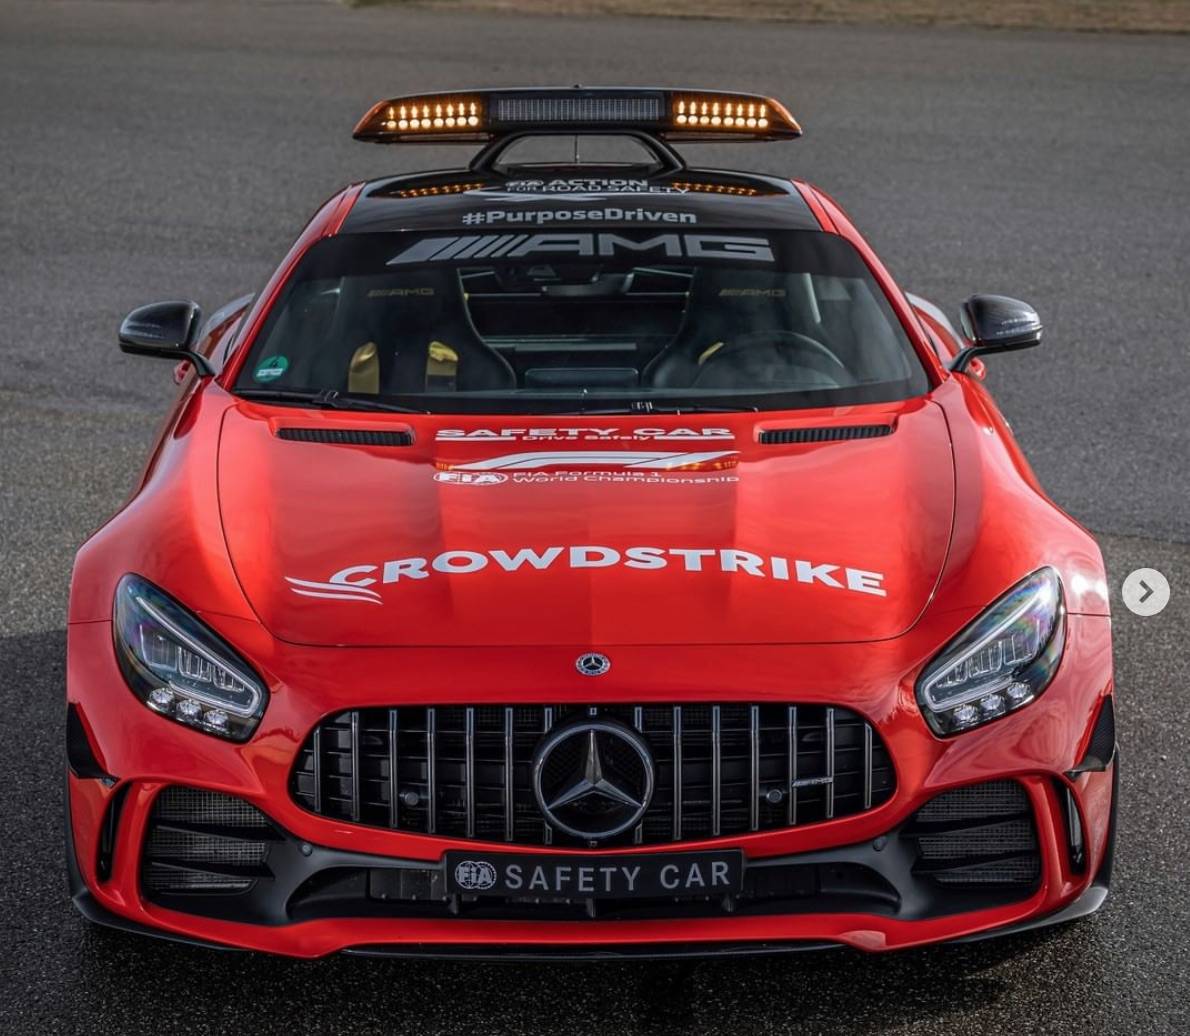 La Mercedes provoca: safety car rossa...